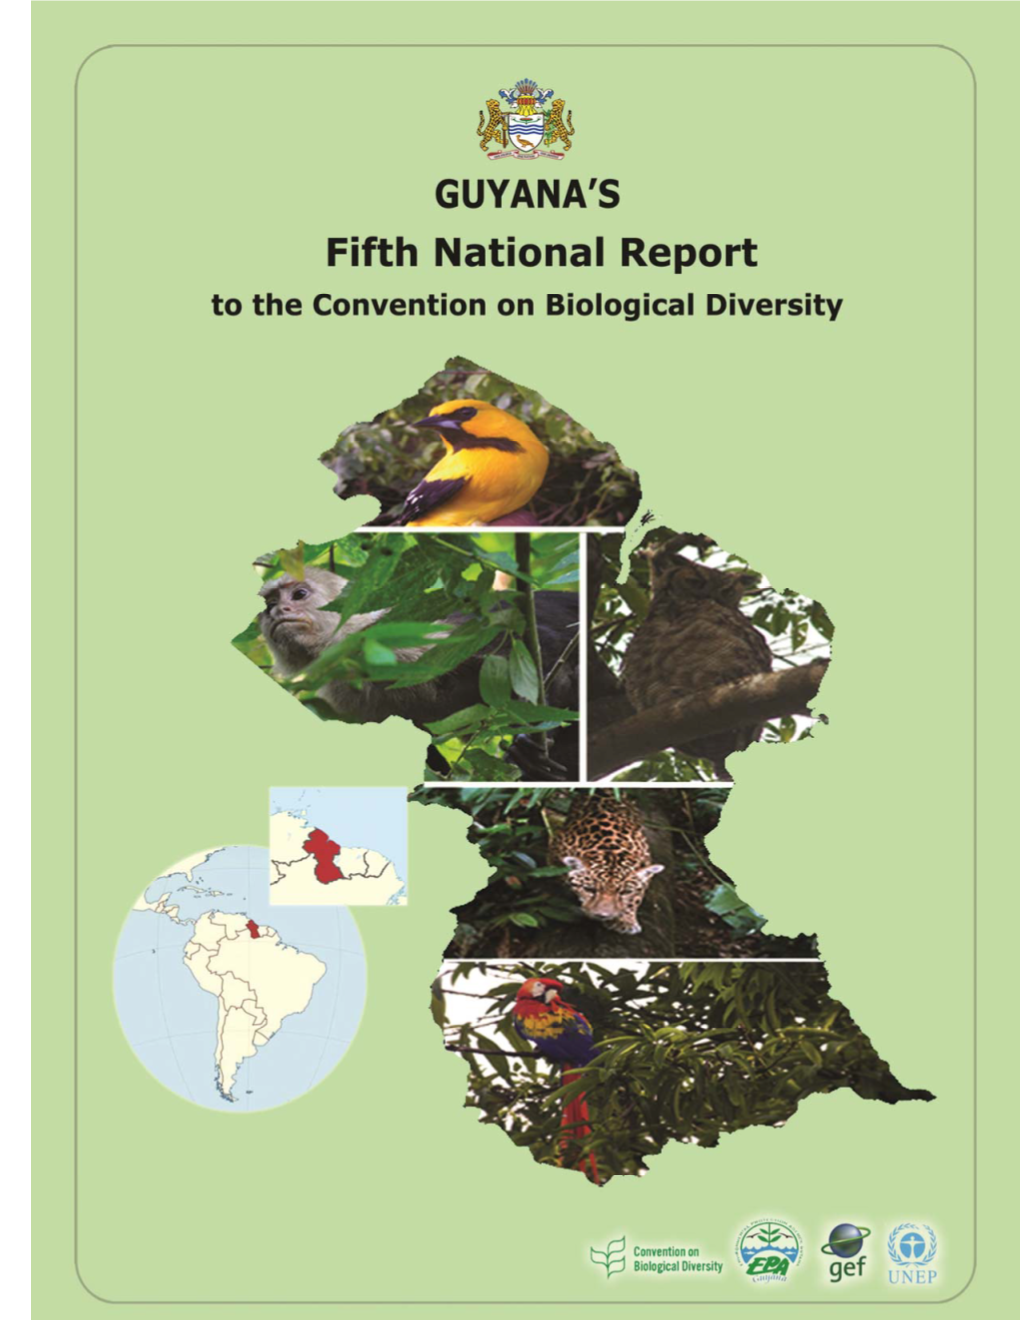 GUYANA) Guyana's Fifth National